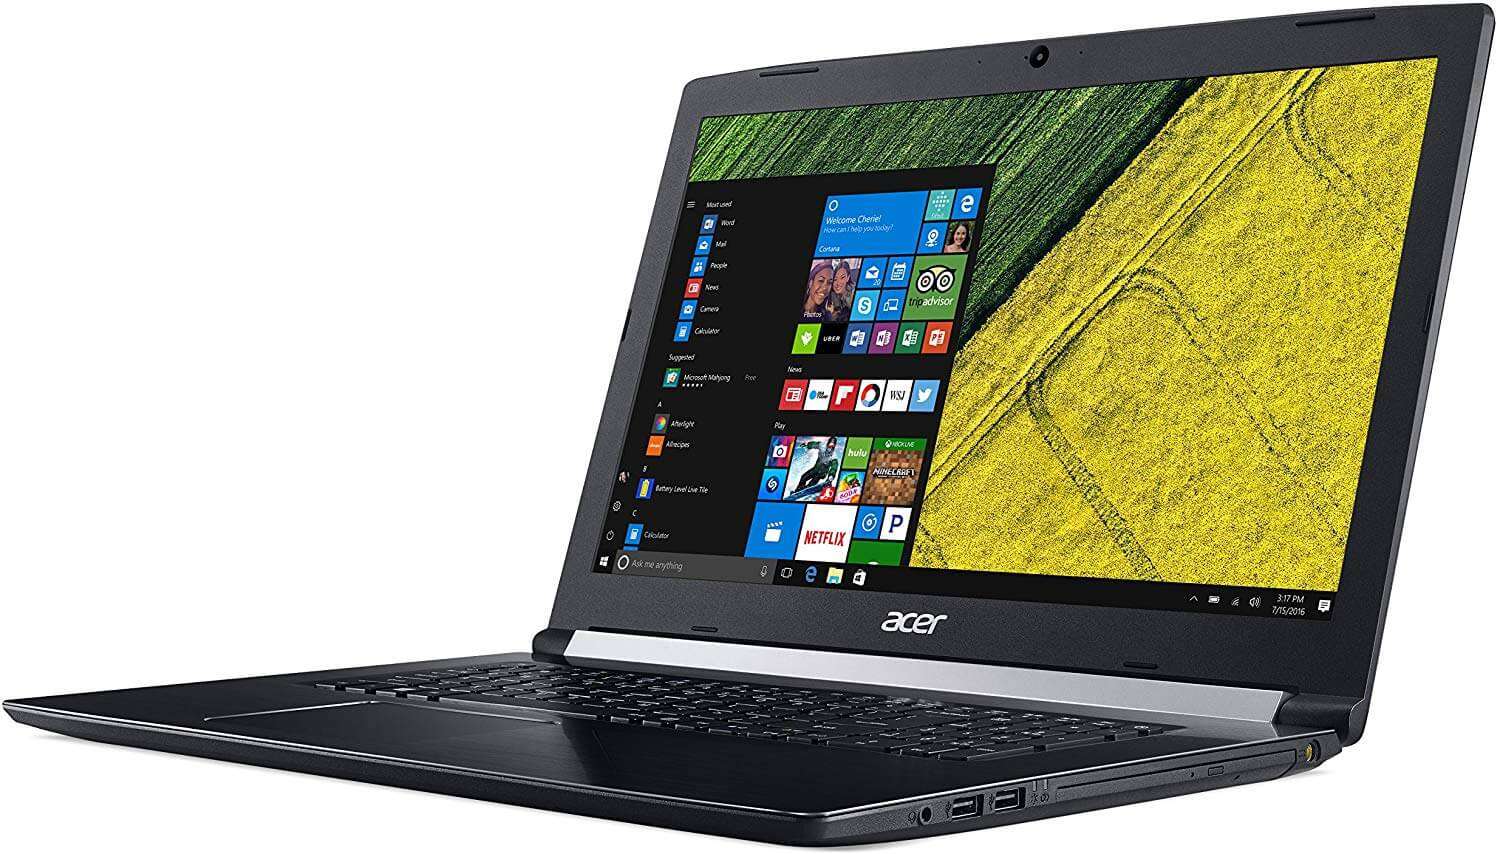 Acer Aspire 5 With 15.6-Inch Display, Core i5 Processor/6GB RAM/1TB HDD/2GB NVIDIA GeForce 940MX Graphics Card/English Keyboard Steel Grey